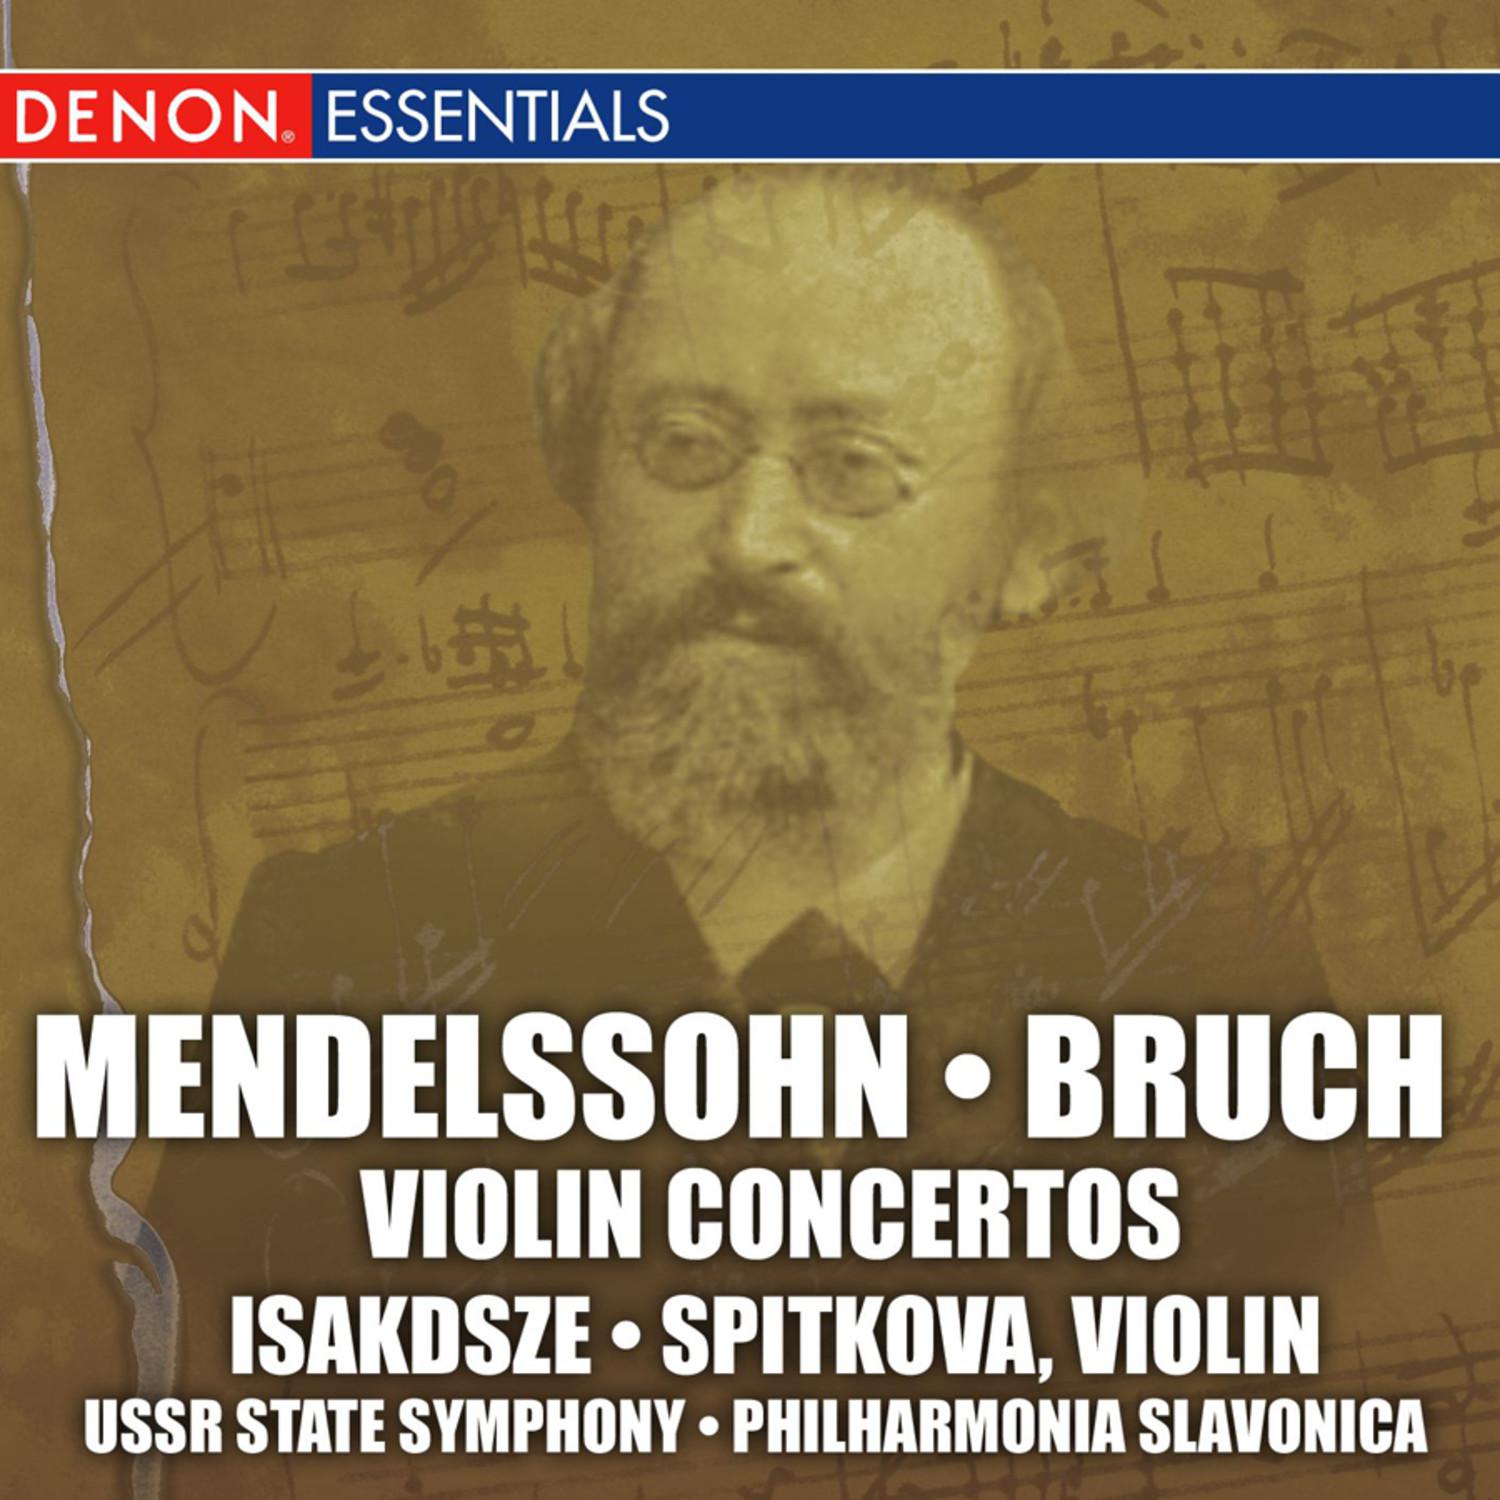 Concerto No. 1 for Violin and Orchestra in G Minor, Op. 26: III. Finale: Allegro energico